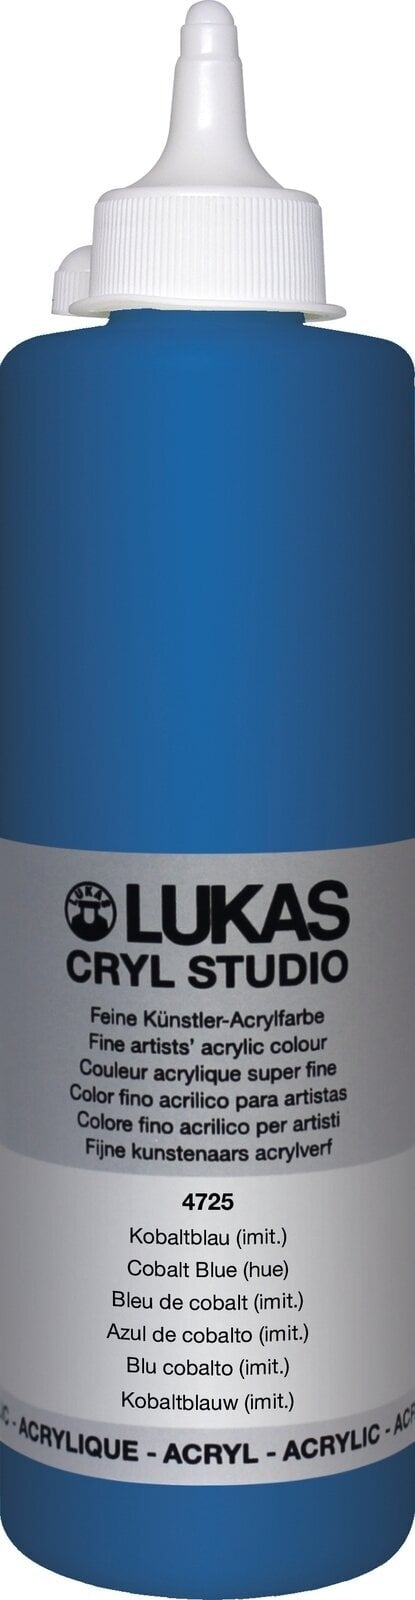 Acrylic Paint Lukas Cryl Studio Acrylic Paint Plastic Bottle Acrylic Paint Cobalt Blue Hue 500 ml 1 pc